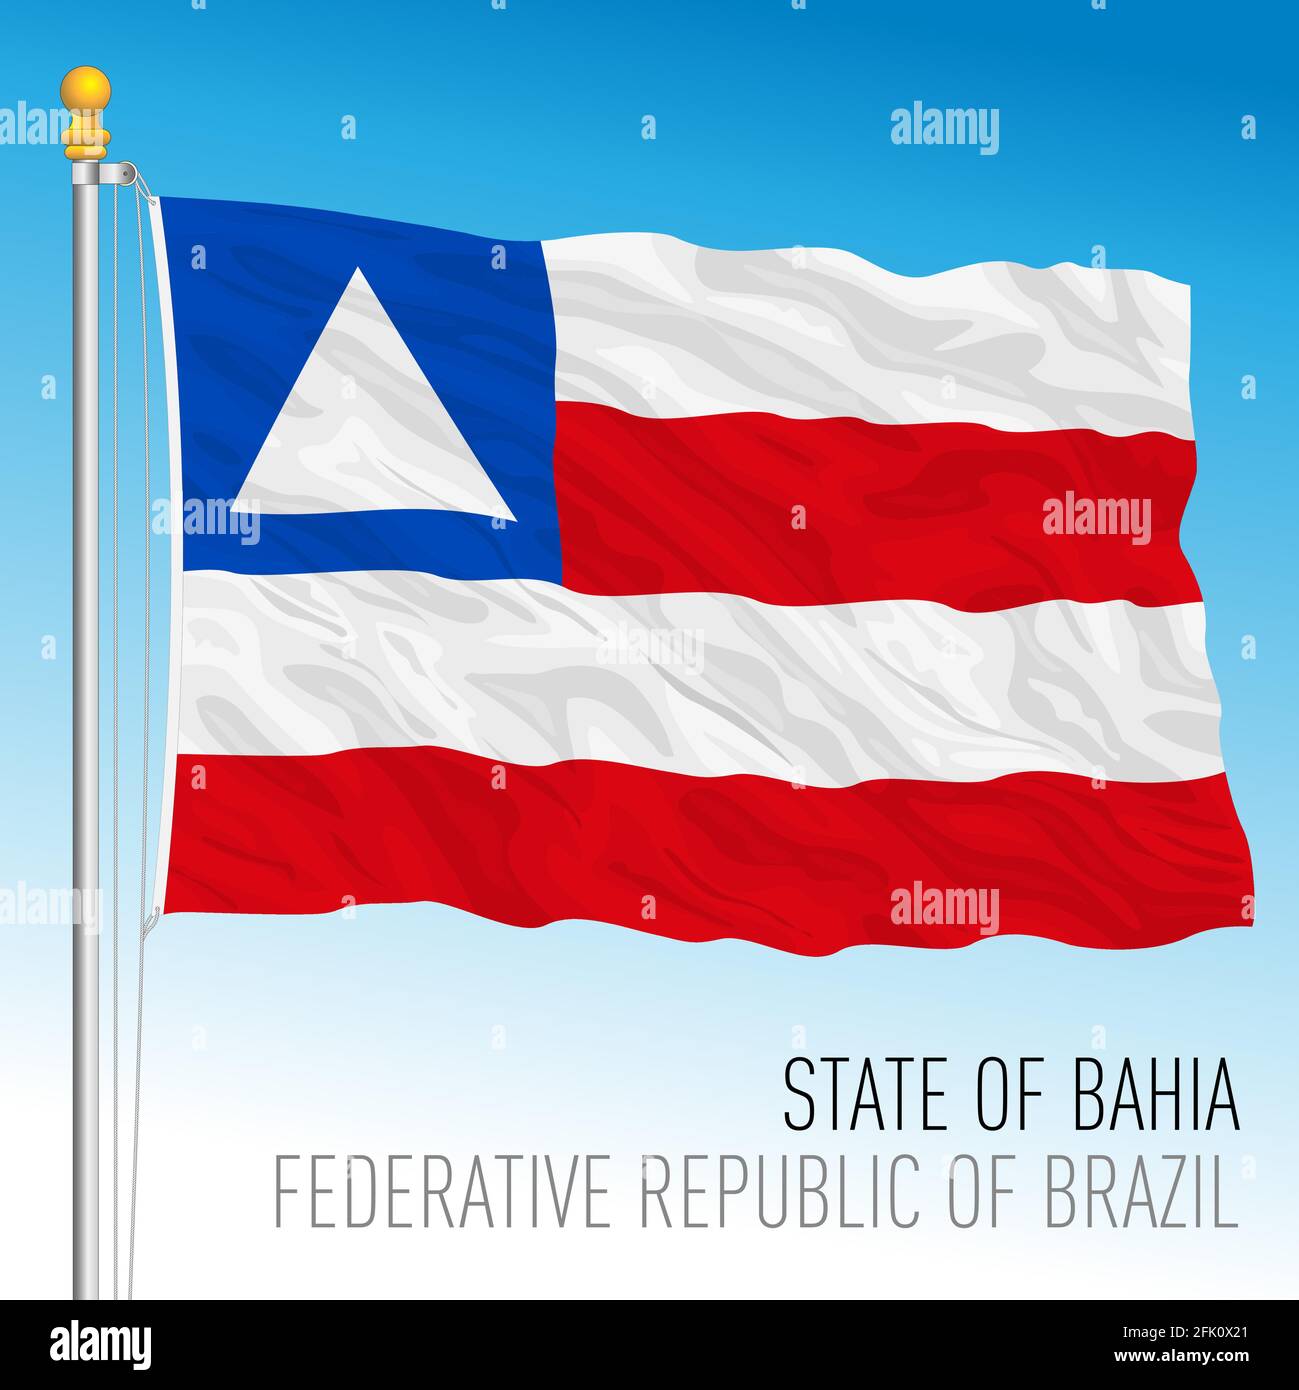 Bundesstaat Bahia, offizielle Regionalflagge, Brasilien, Vektorgrafik Stock Vektor